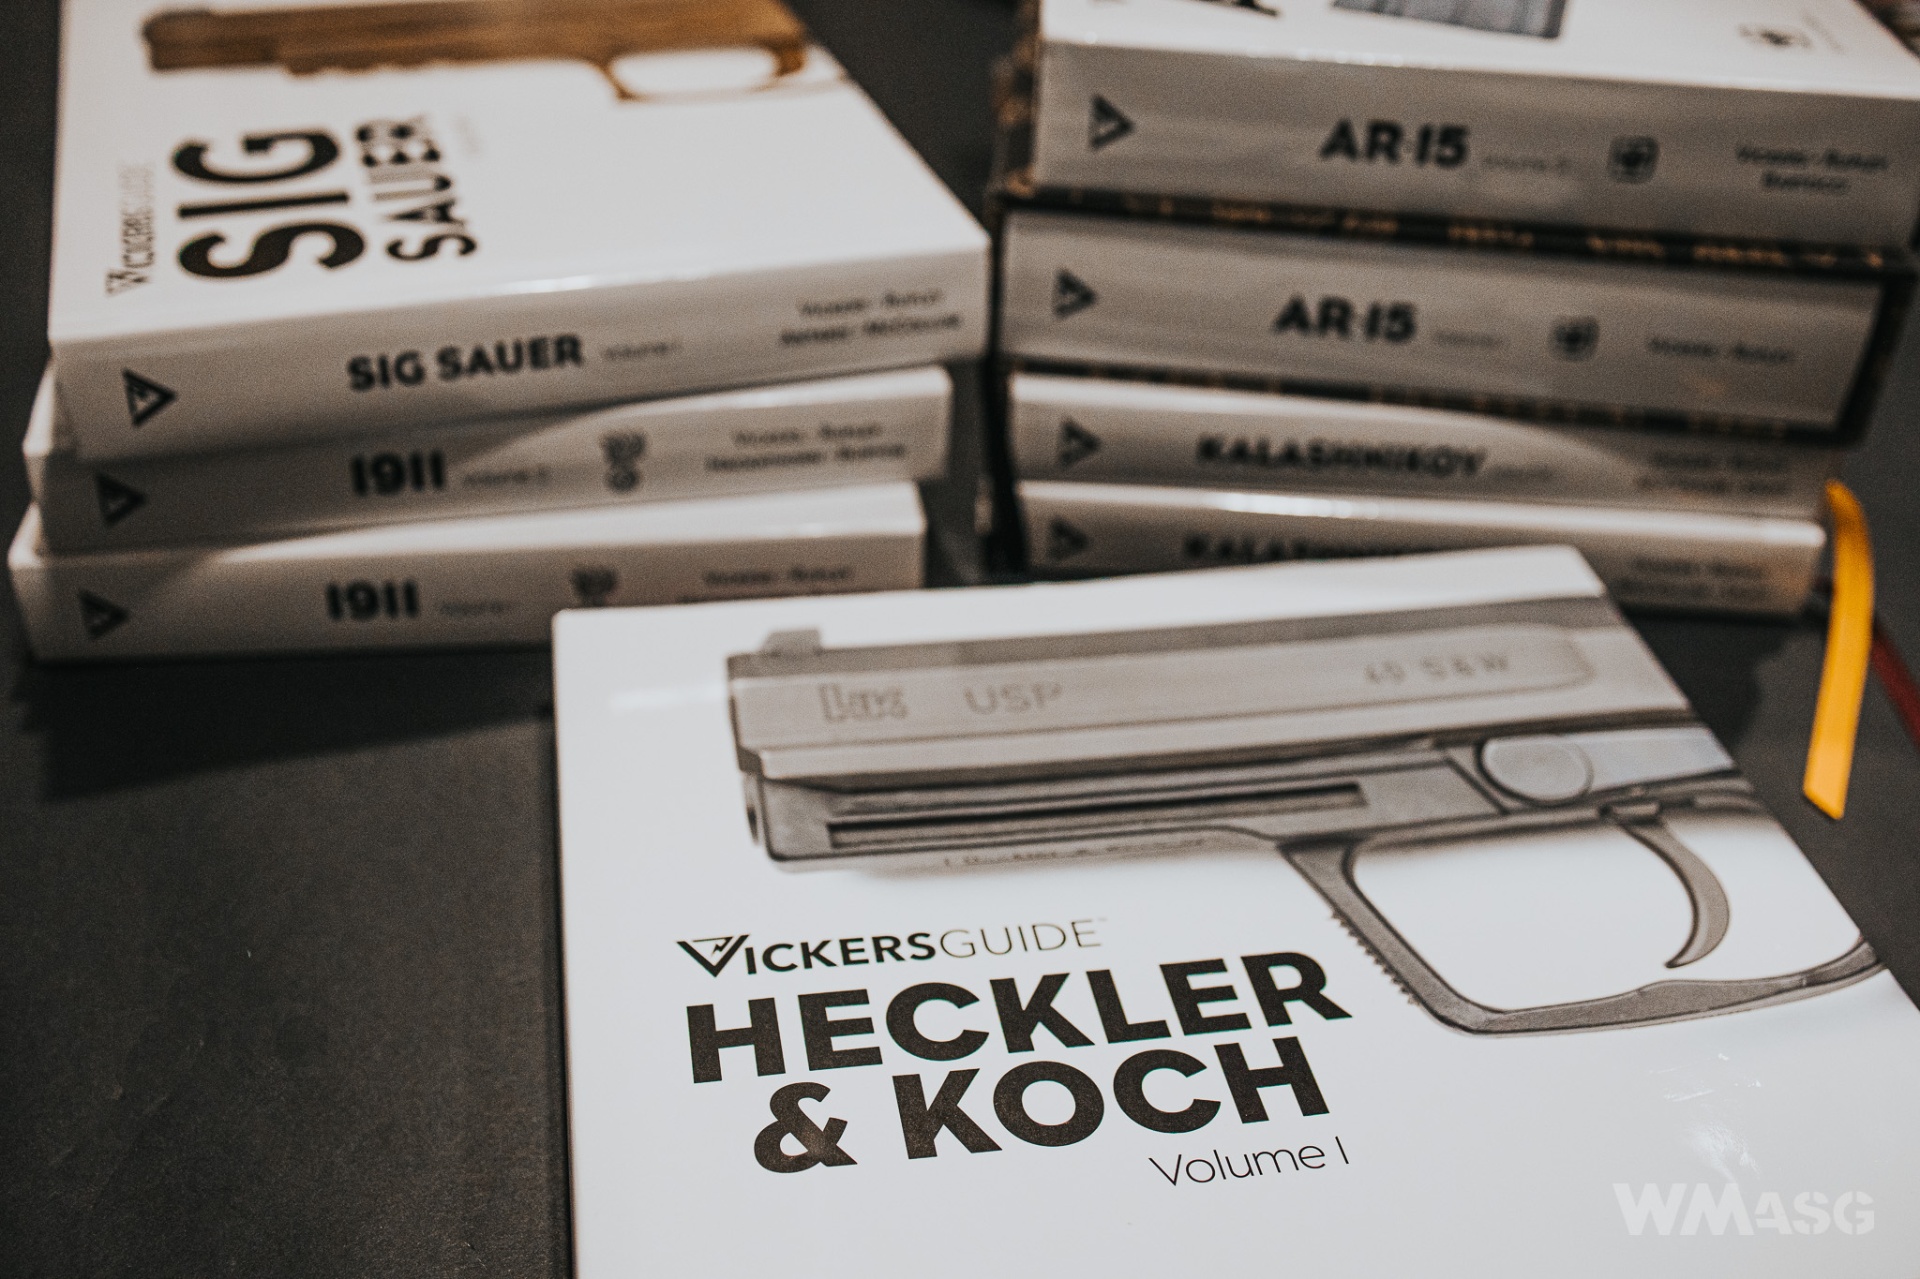 Vickers Guide Heckler & Koch